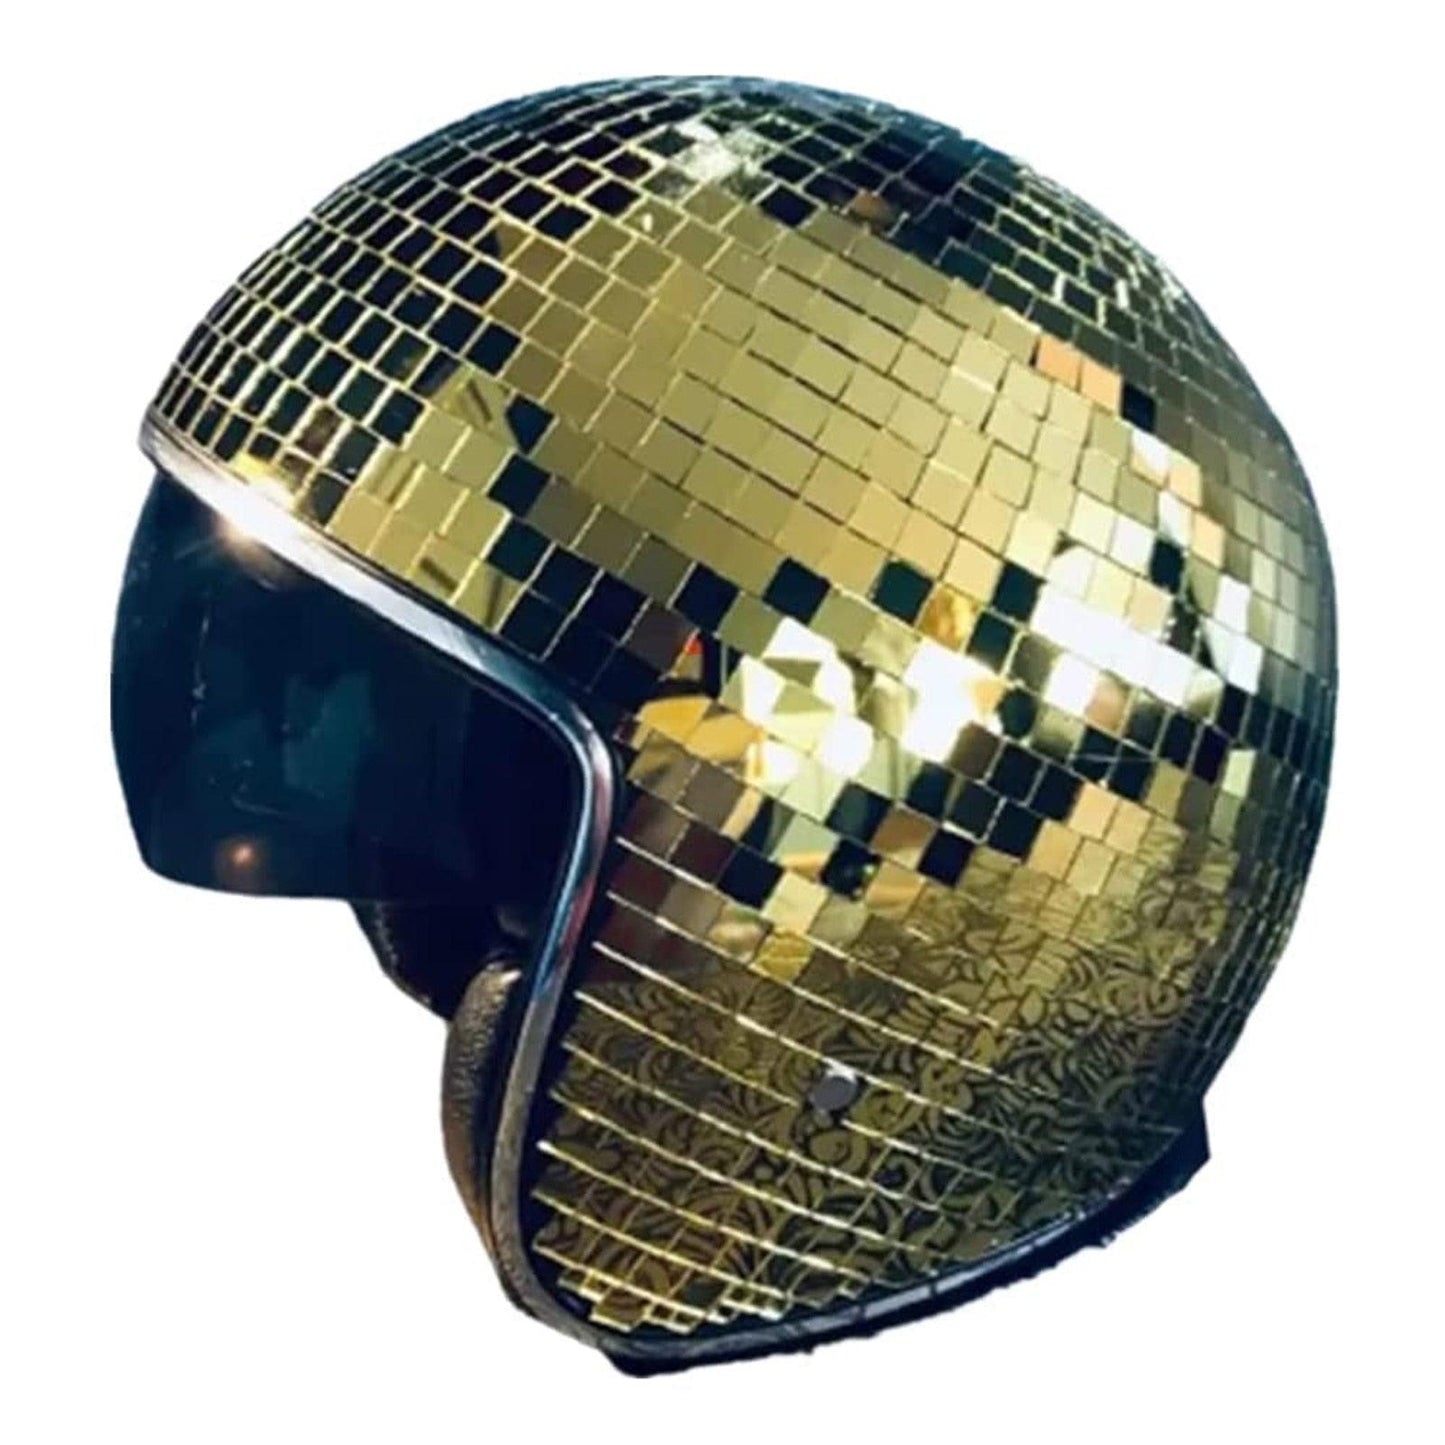 Disco Ball Helmet with Retractable Visor Hats - The Burner Shop